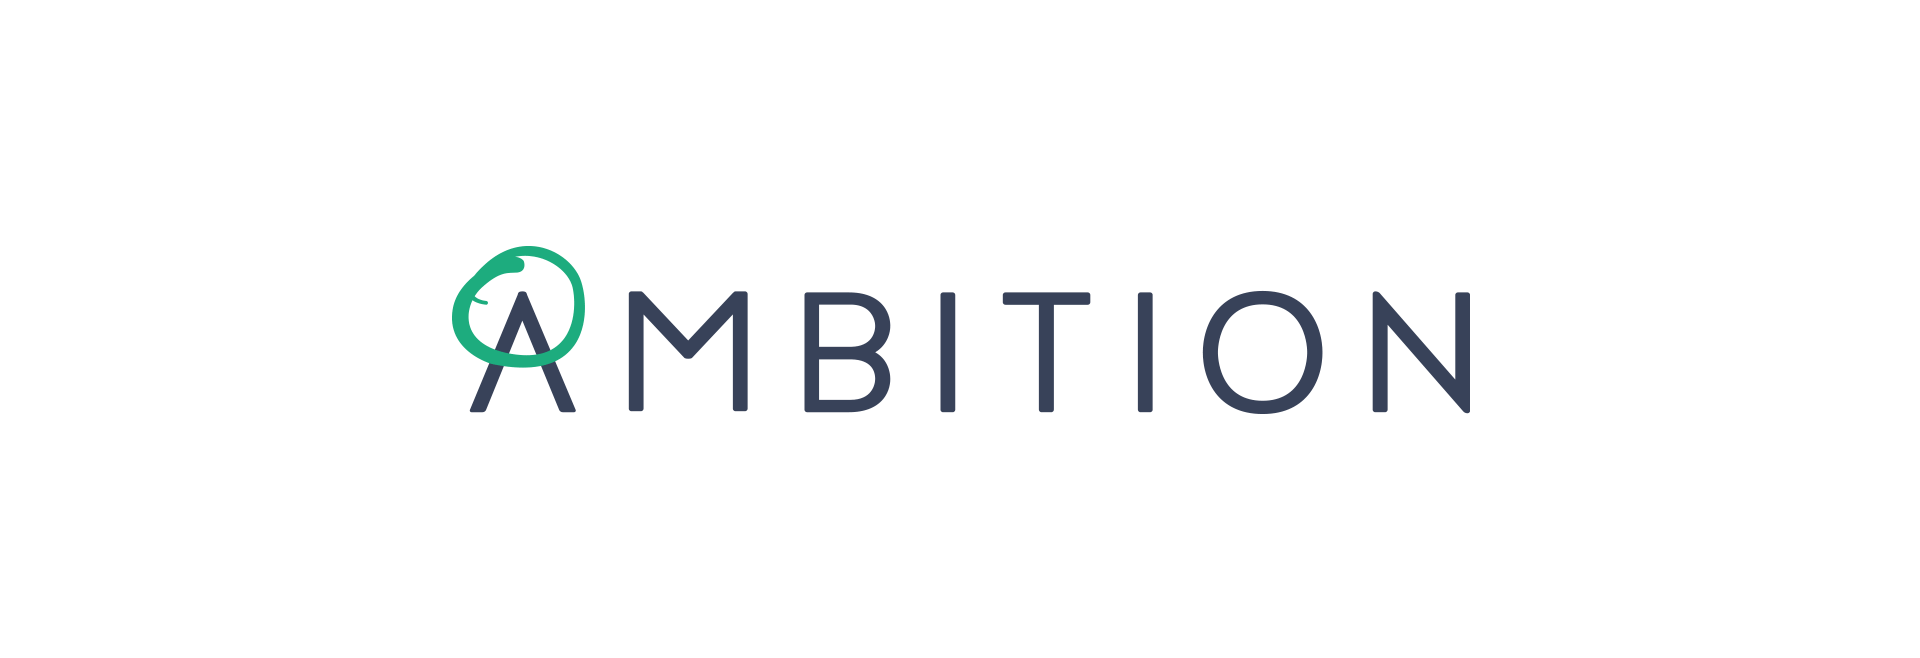 Final Ambition logo